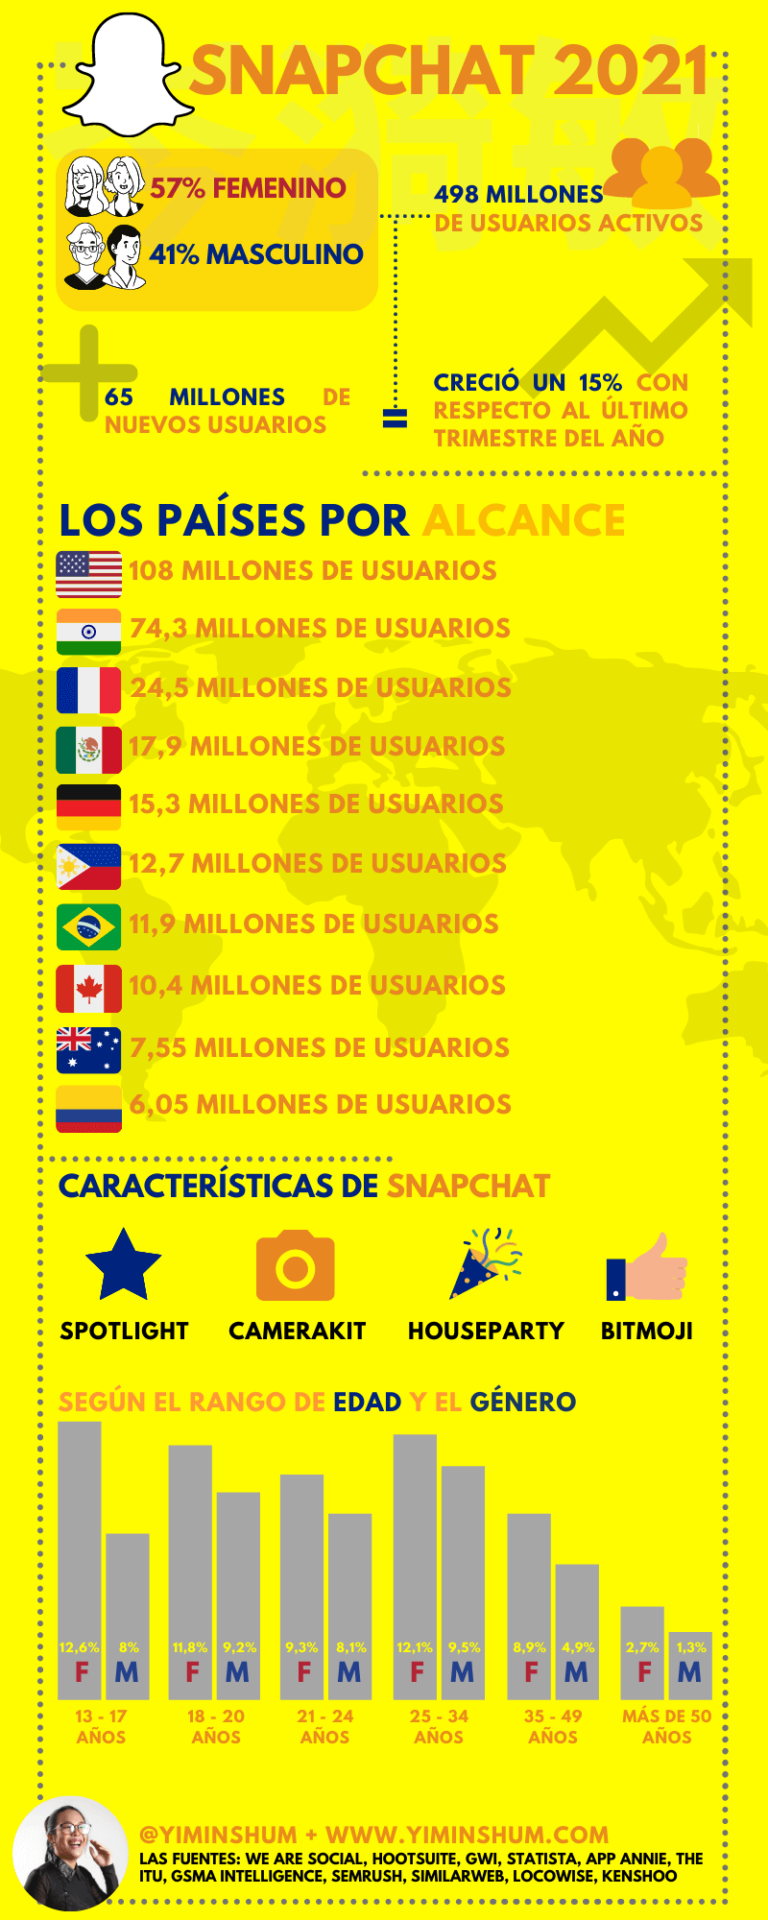 Los datos de Snapchat en 2021 #infografia #infographic #socialmedia